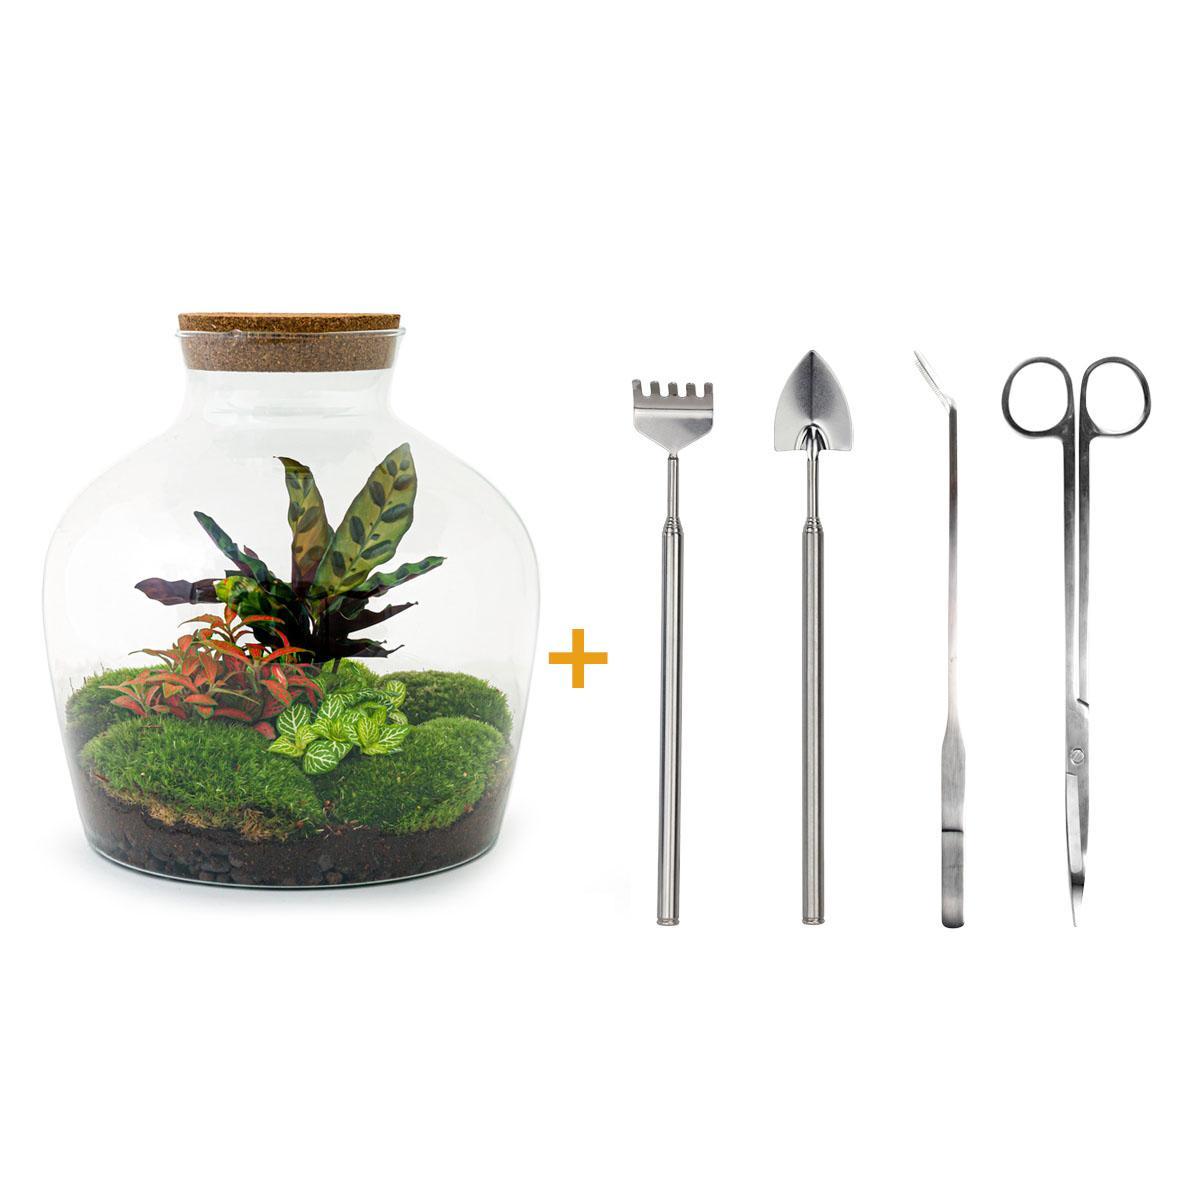 DIY terrarium - Fat Joe Rood - ↑ 30 cm + Rake + Shovel + Tweezer + Scissors